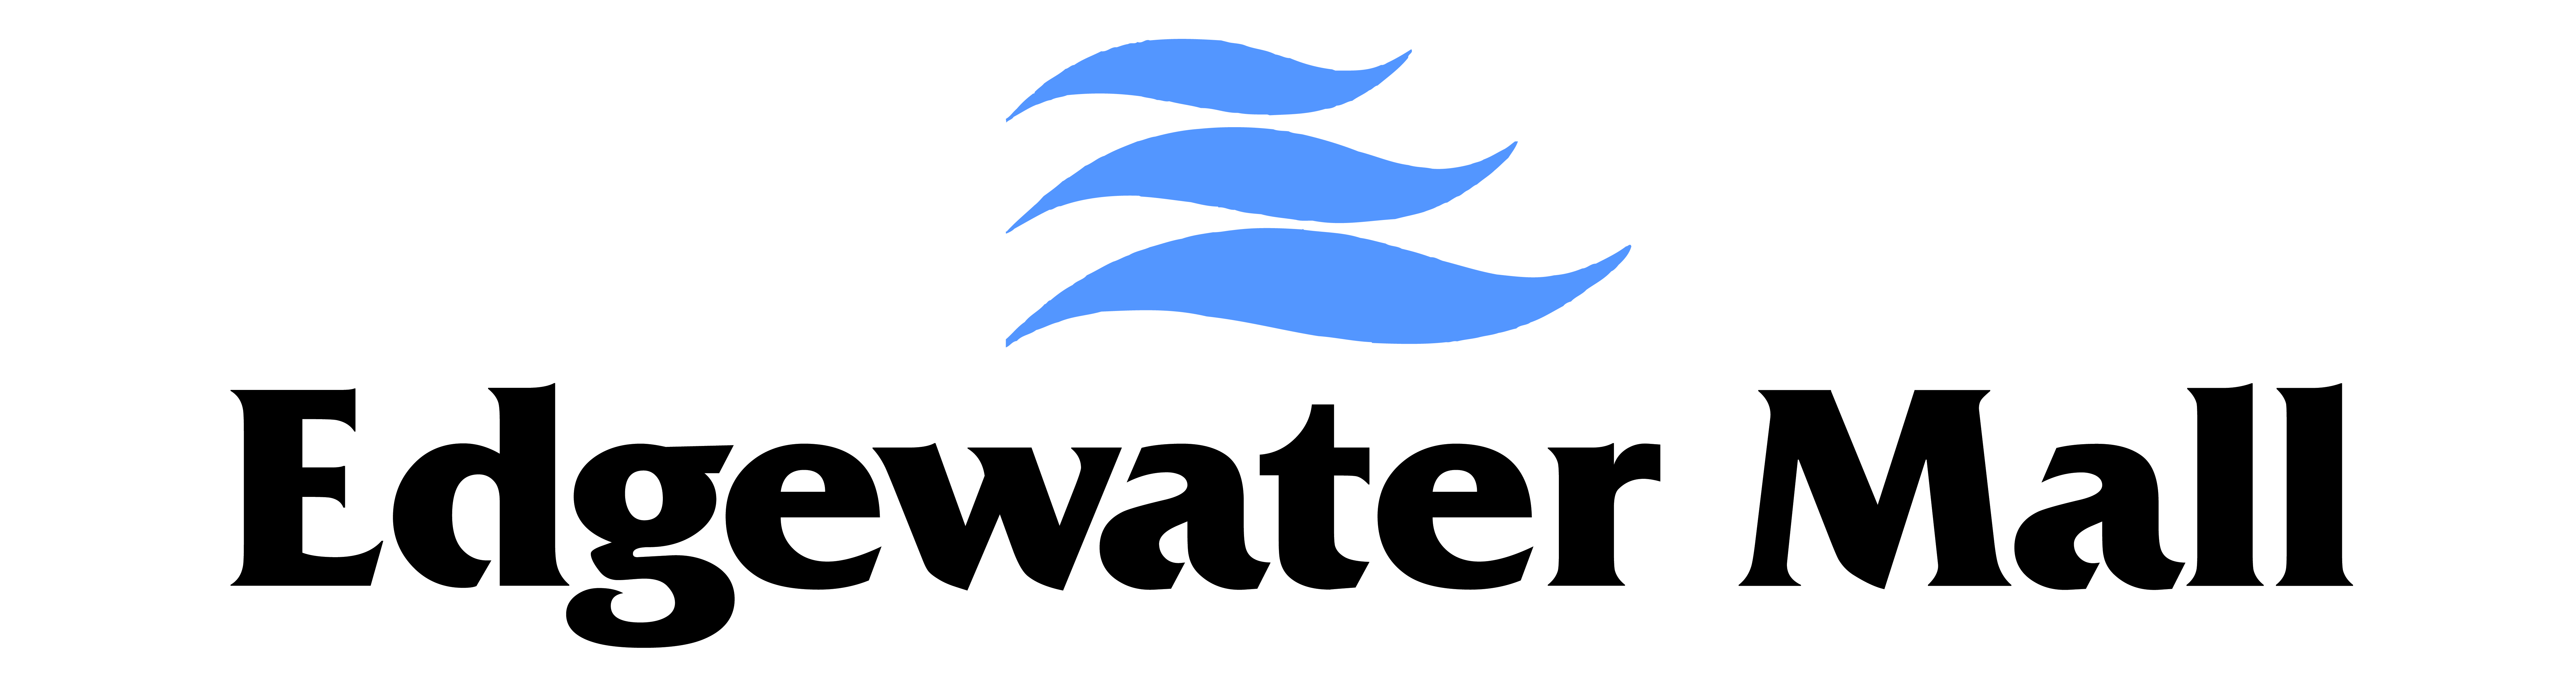 Edgewater Mall logo